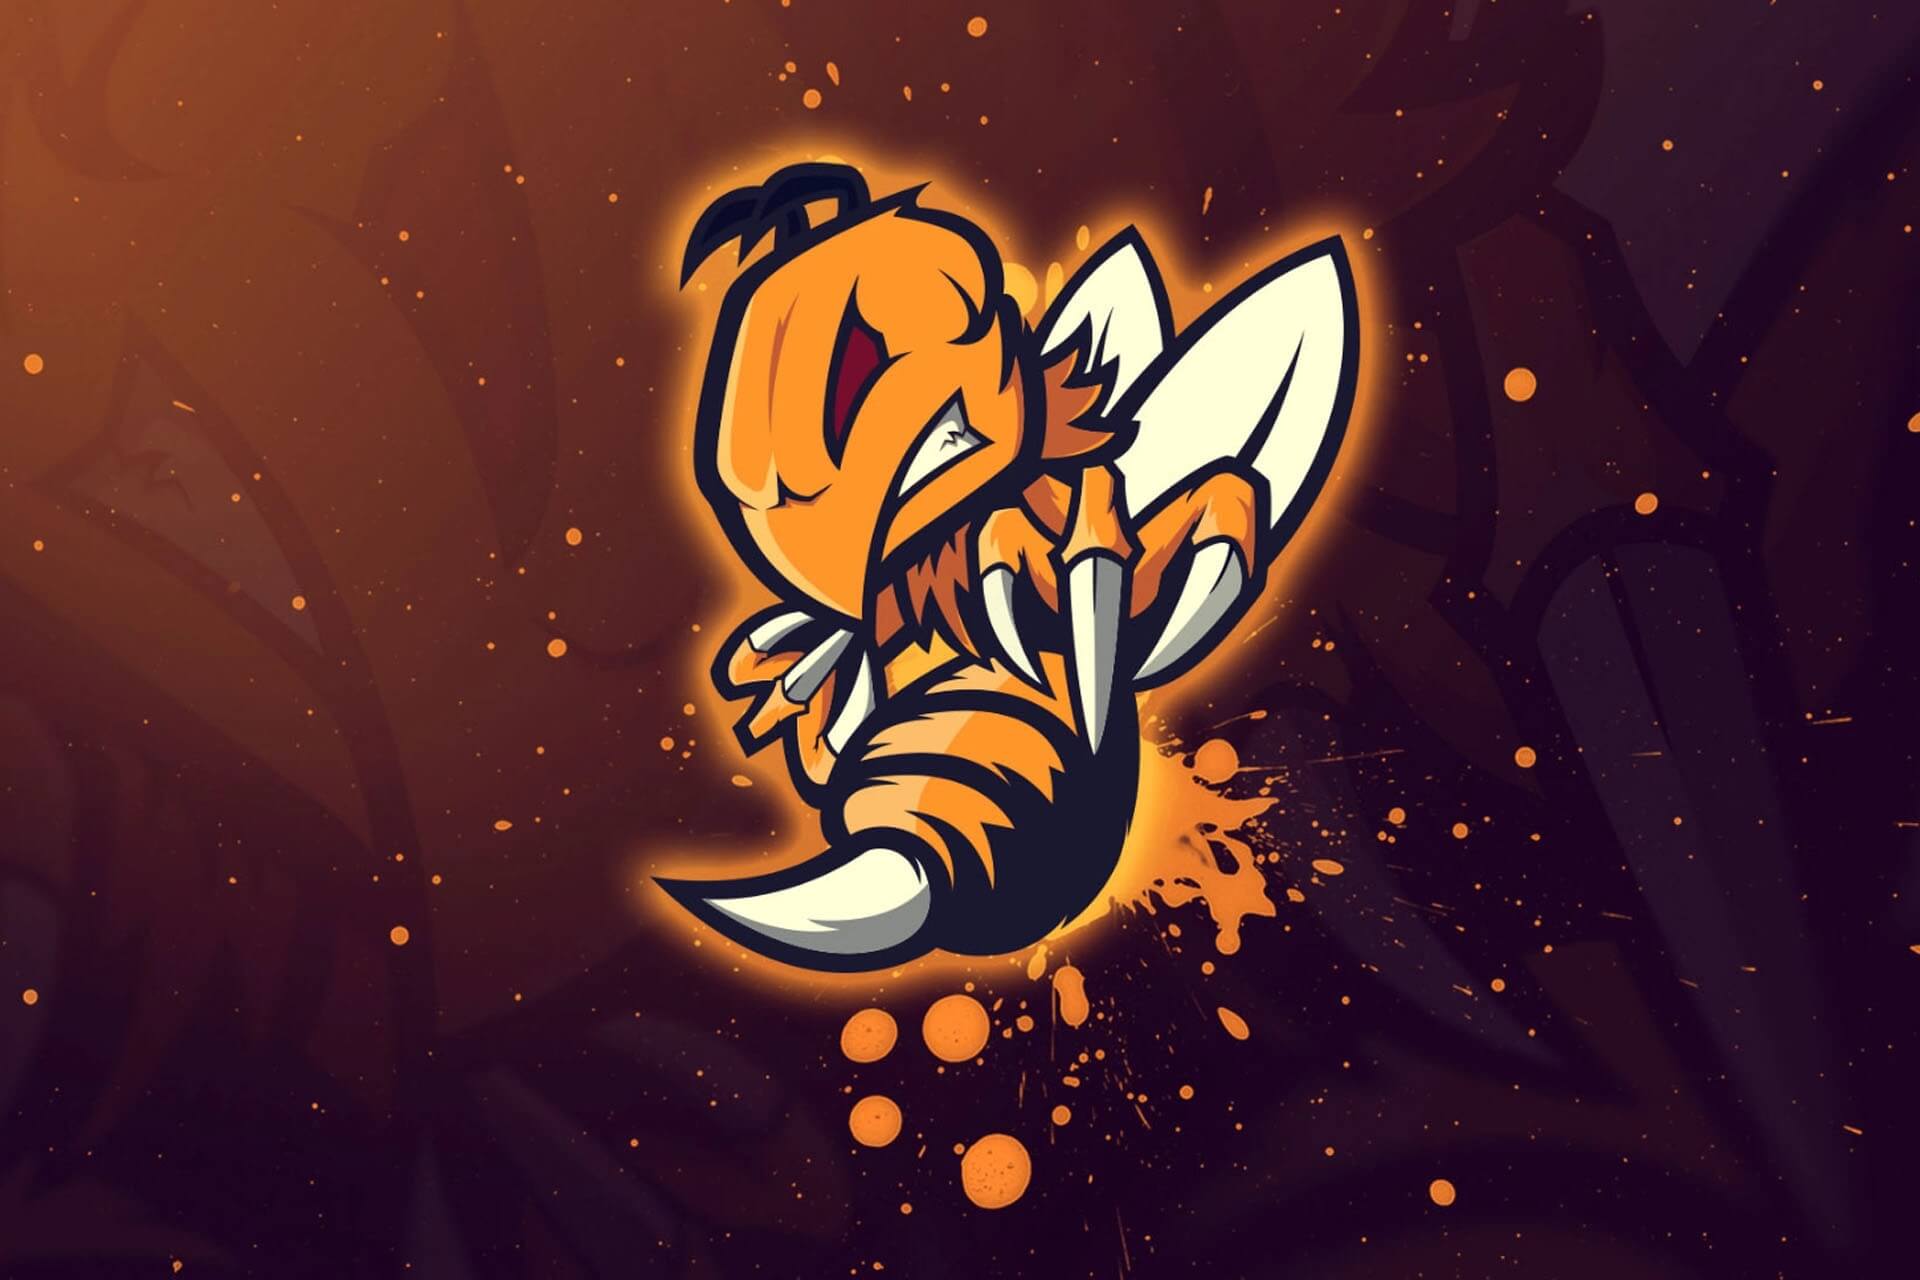 BeeWare-logo-mascot